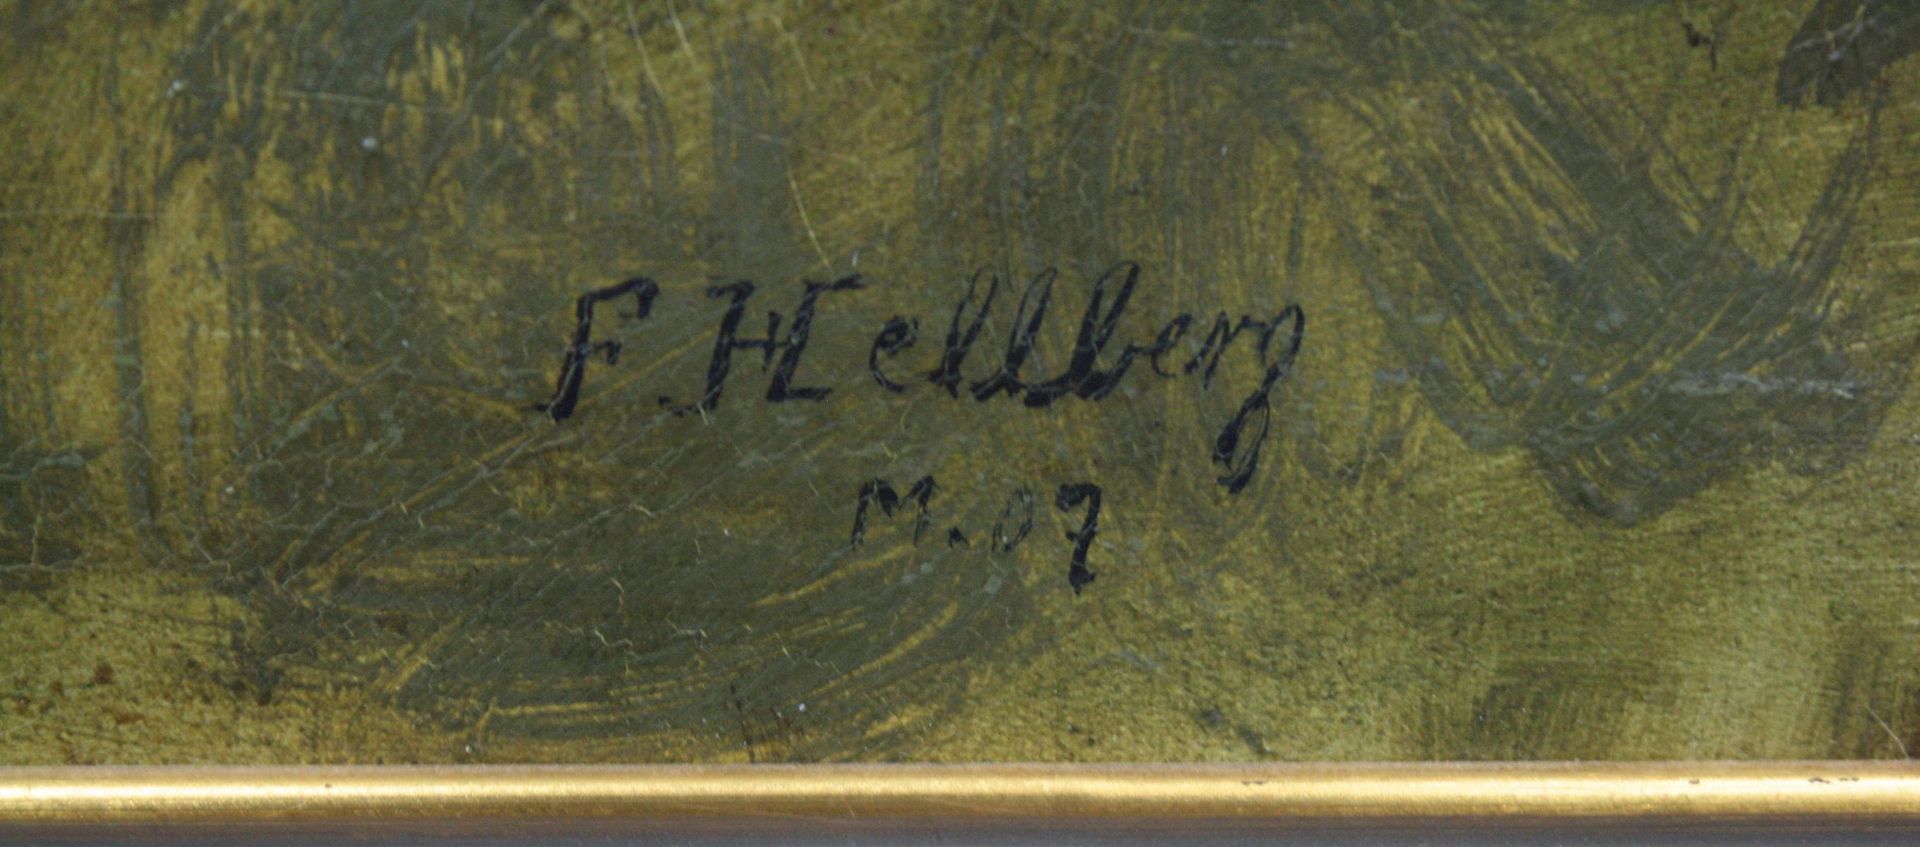 F. Hellberg - Image 5 of 8